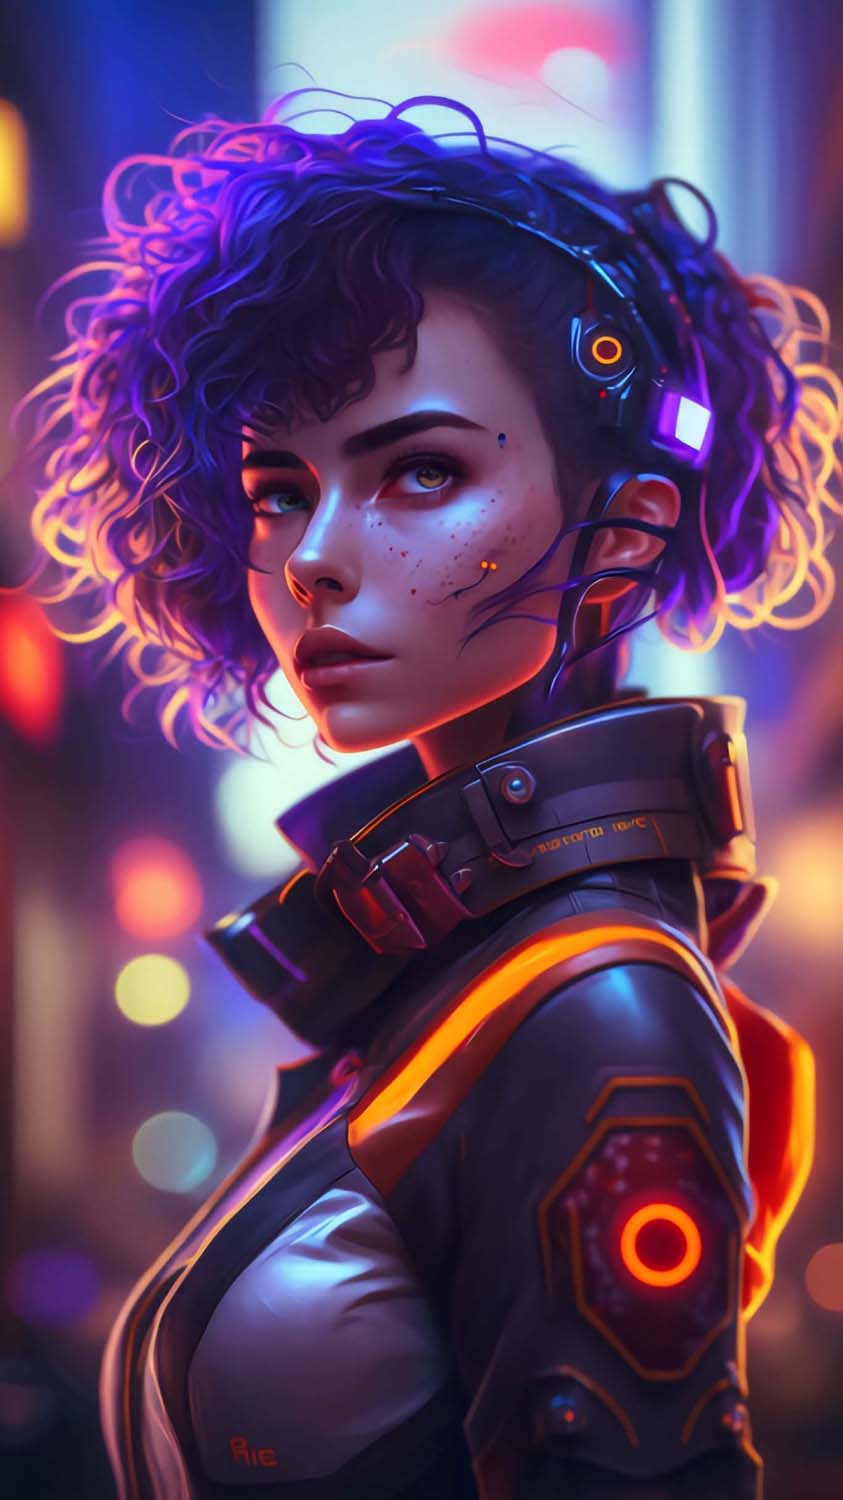 Premium Photo  A fictional portrait of a scifi cyberpunk girl against a  backdrop of neon lights